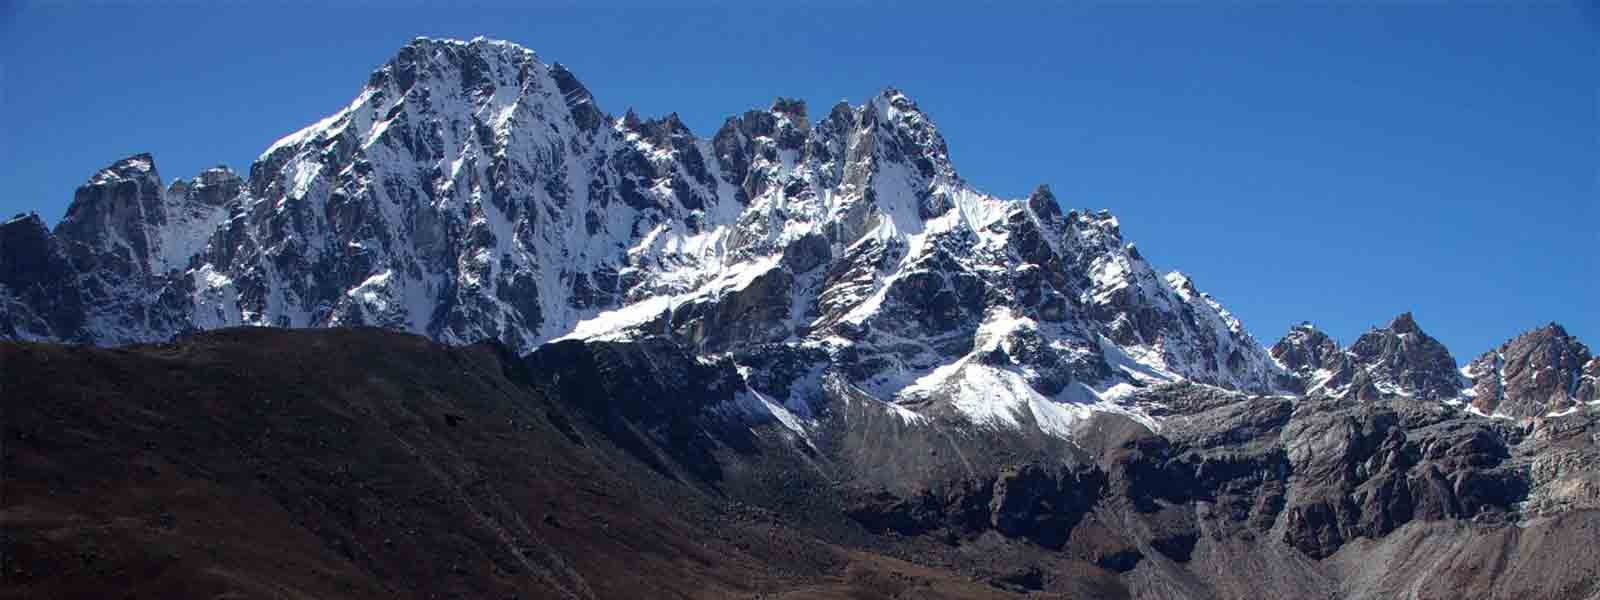 Phari Lapcha Peak